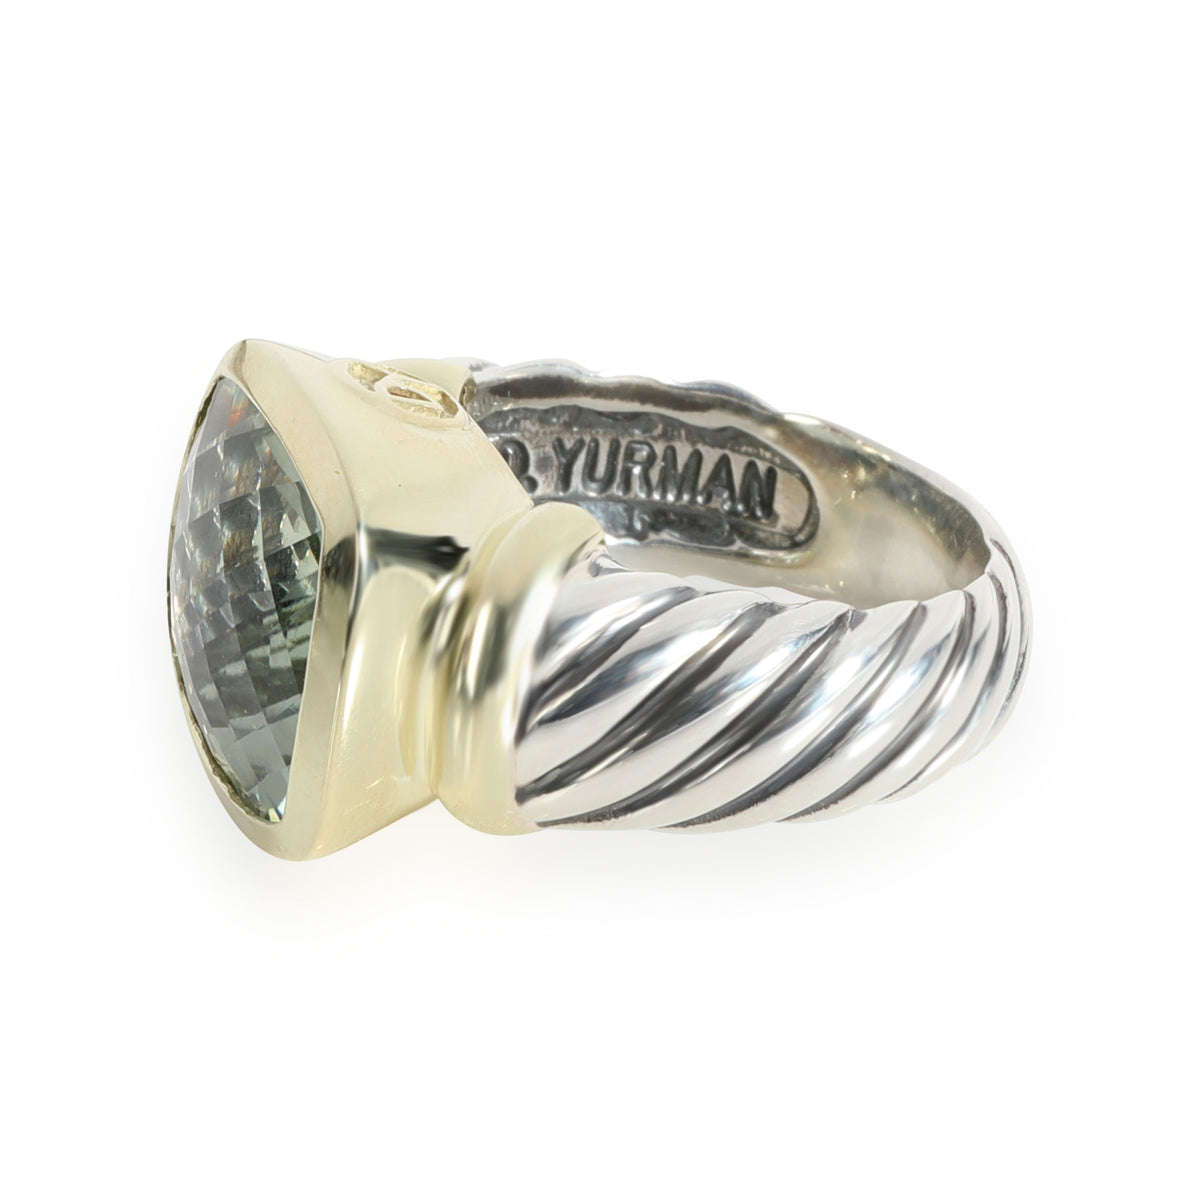 David Yurman Noblesse Prasiolite Ring in 14K Yellow Gold/Sterling Silver